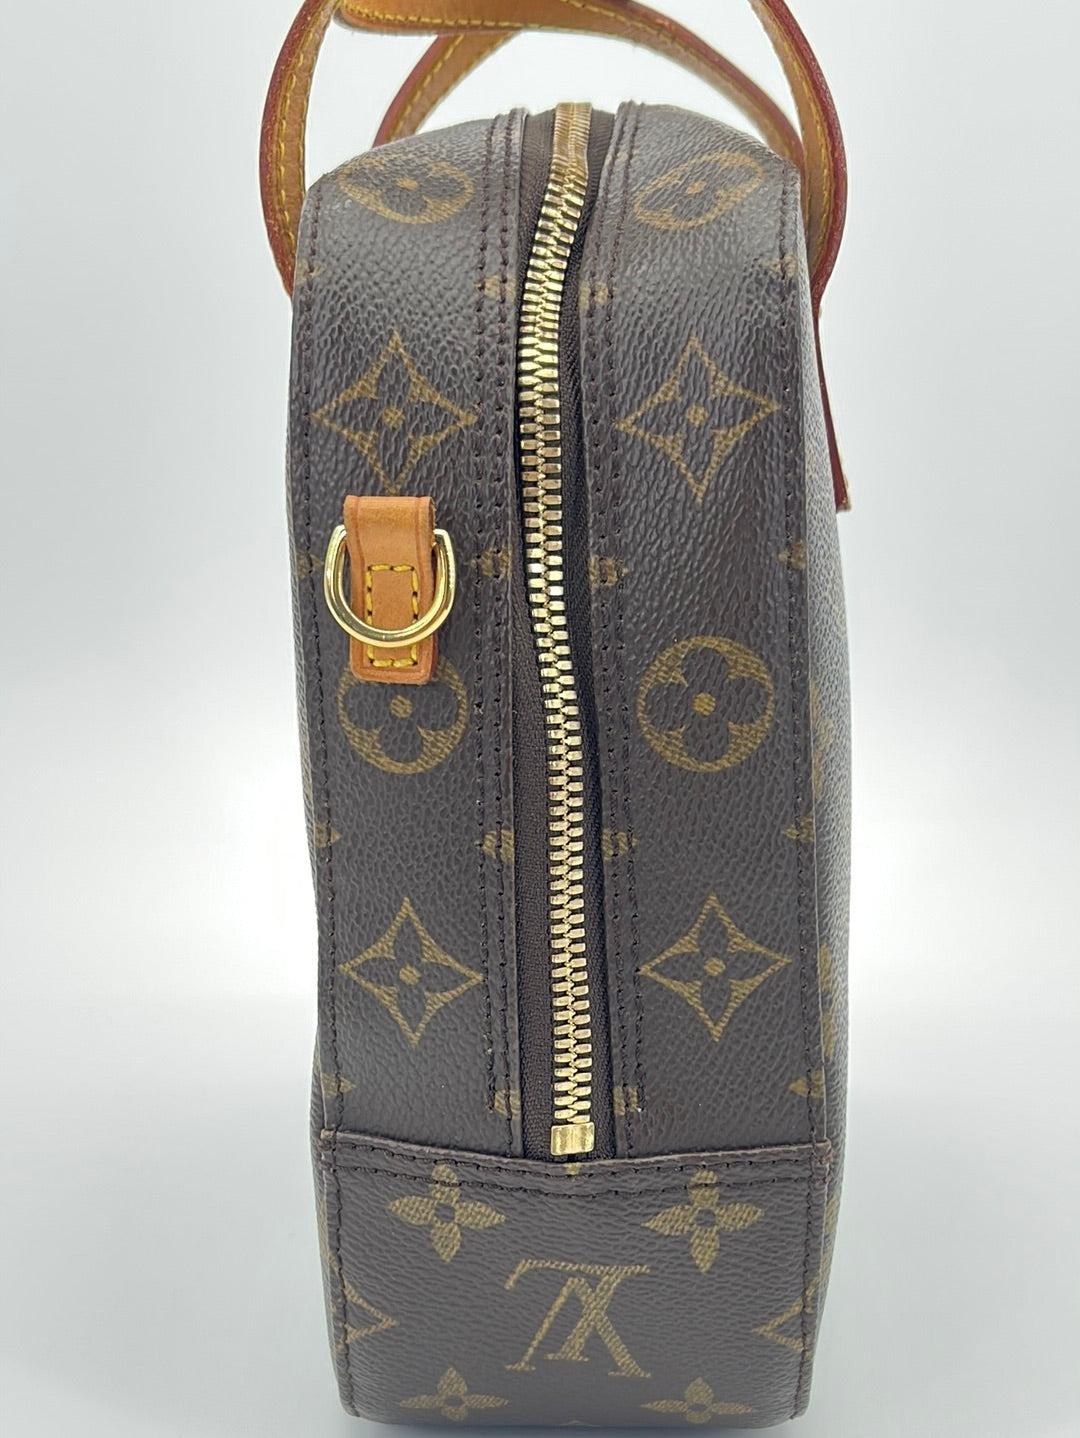 PRELOVED Louis Vuitton Monogram Spontini Hand Shoulder Bag 2way Bag AR1021 052323